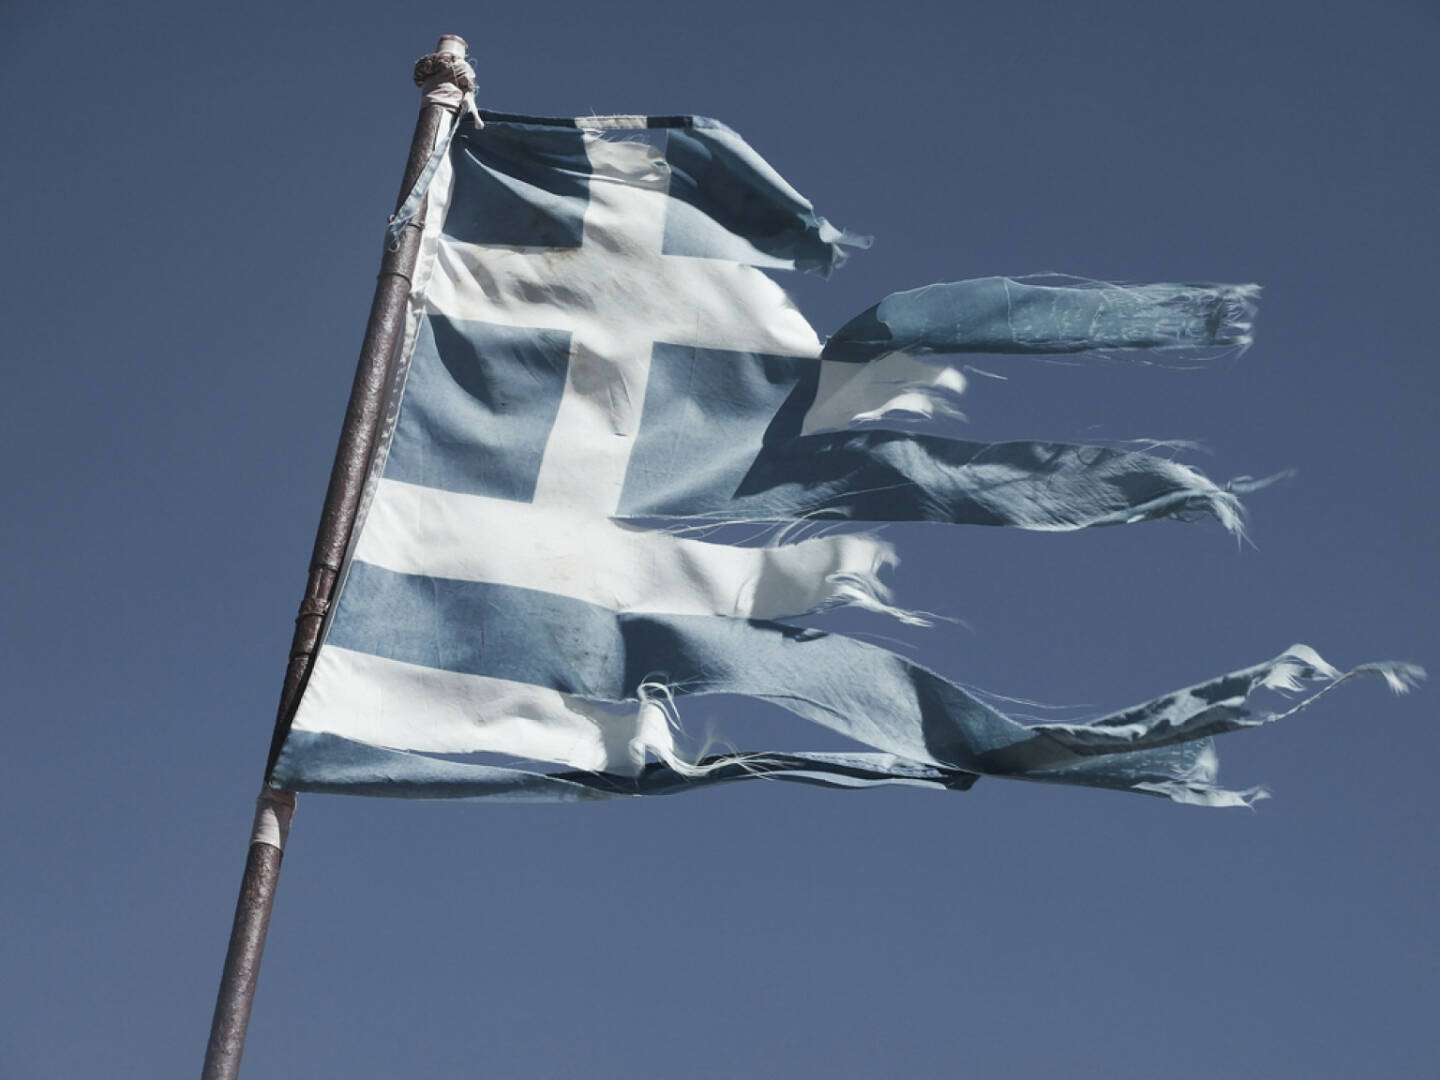 Griechenland, Fahne, zerfetzt, kaputt, ramponiert, schlecht, abwärts, http://www.shutterstock.com/de/pic-227438137/stock-photo-greek-torn-flag-fluttering-in-the-wind-posted-signs-on-a-rusty-pole.html